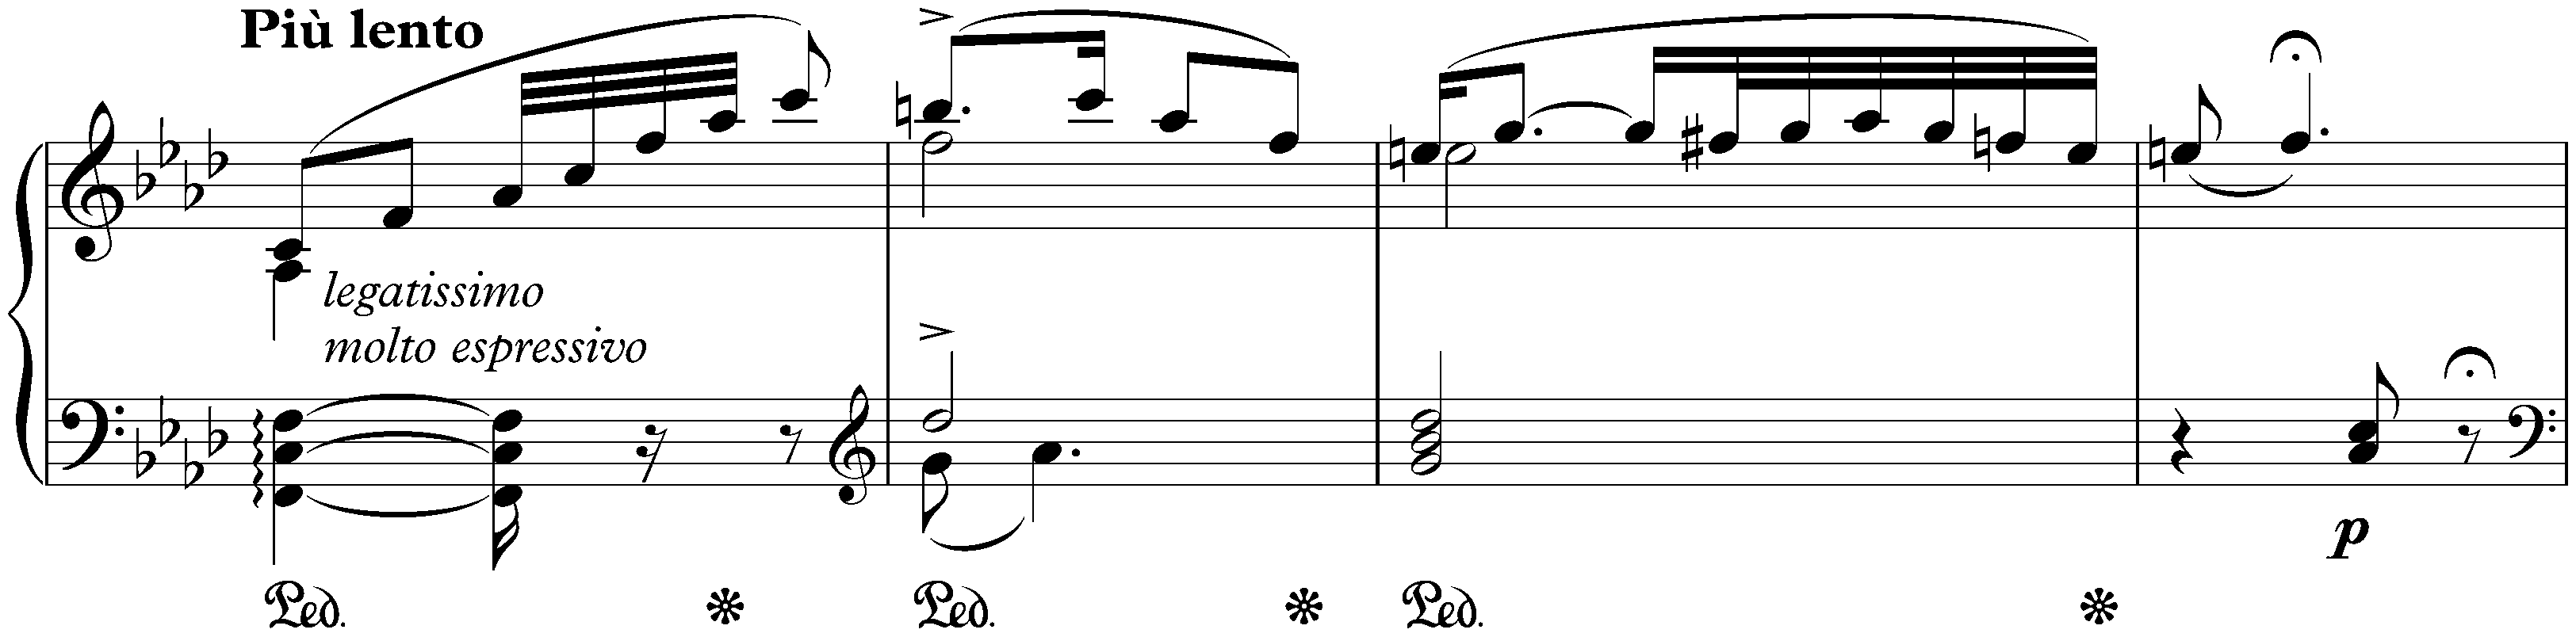 Fünf ungarische Volkslieder, S. 245; 5. F minor